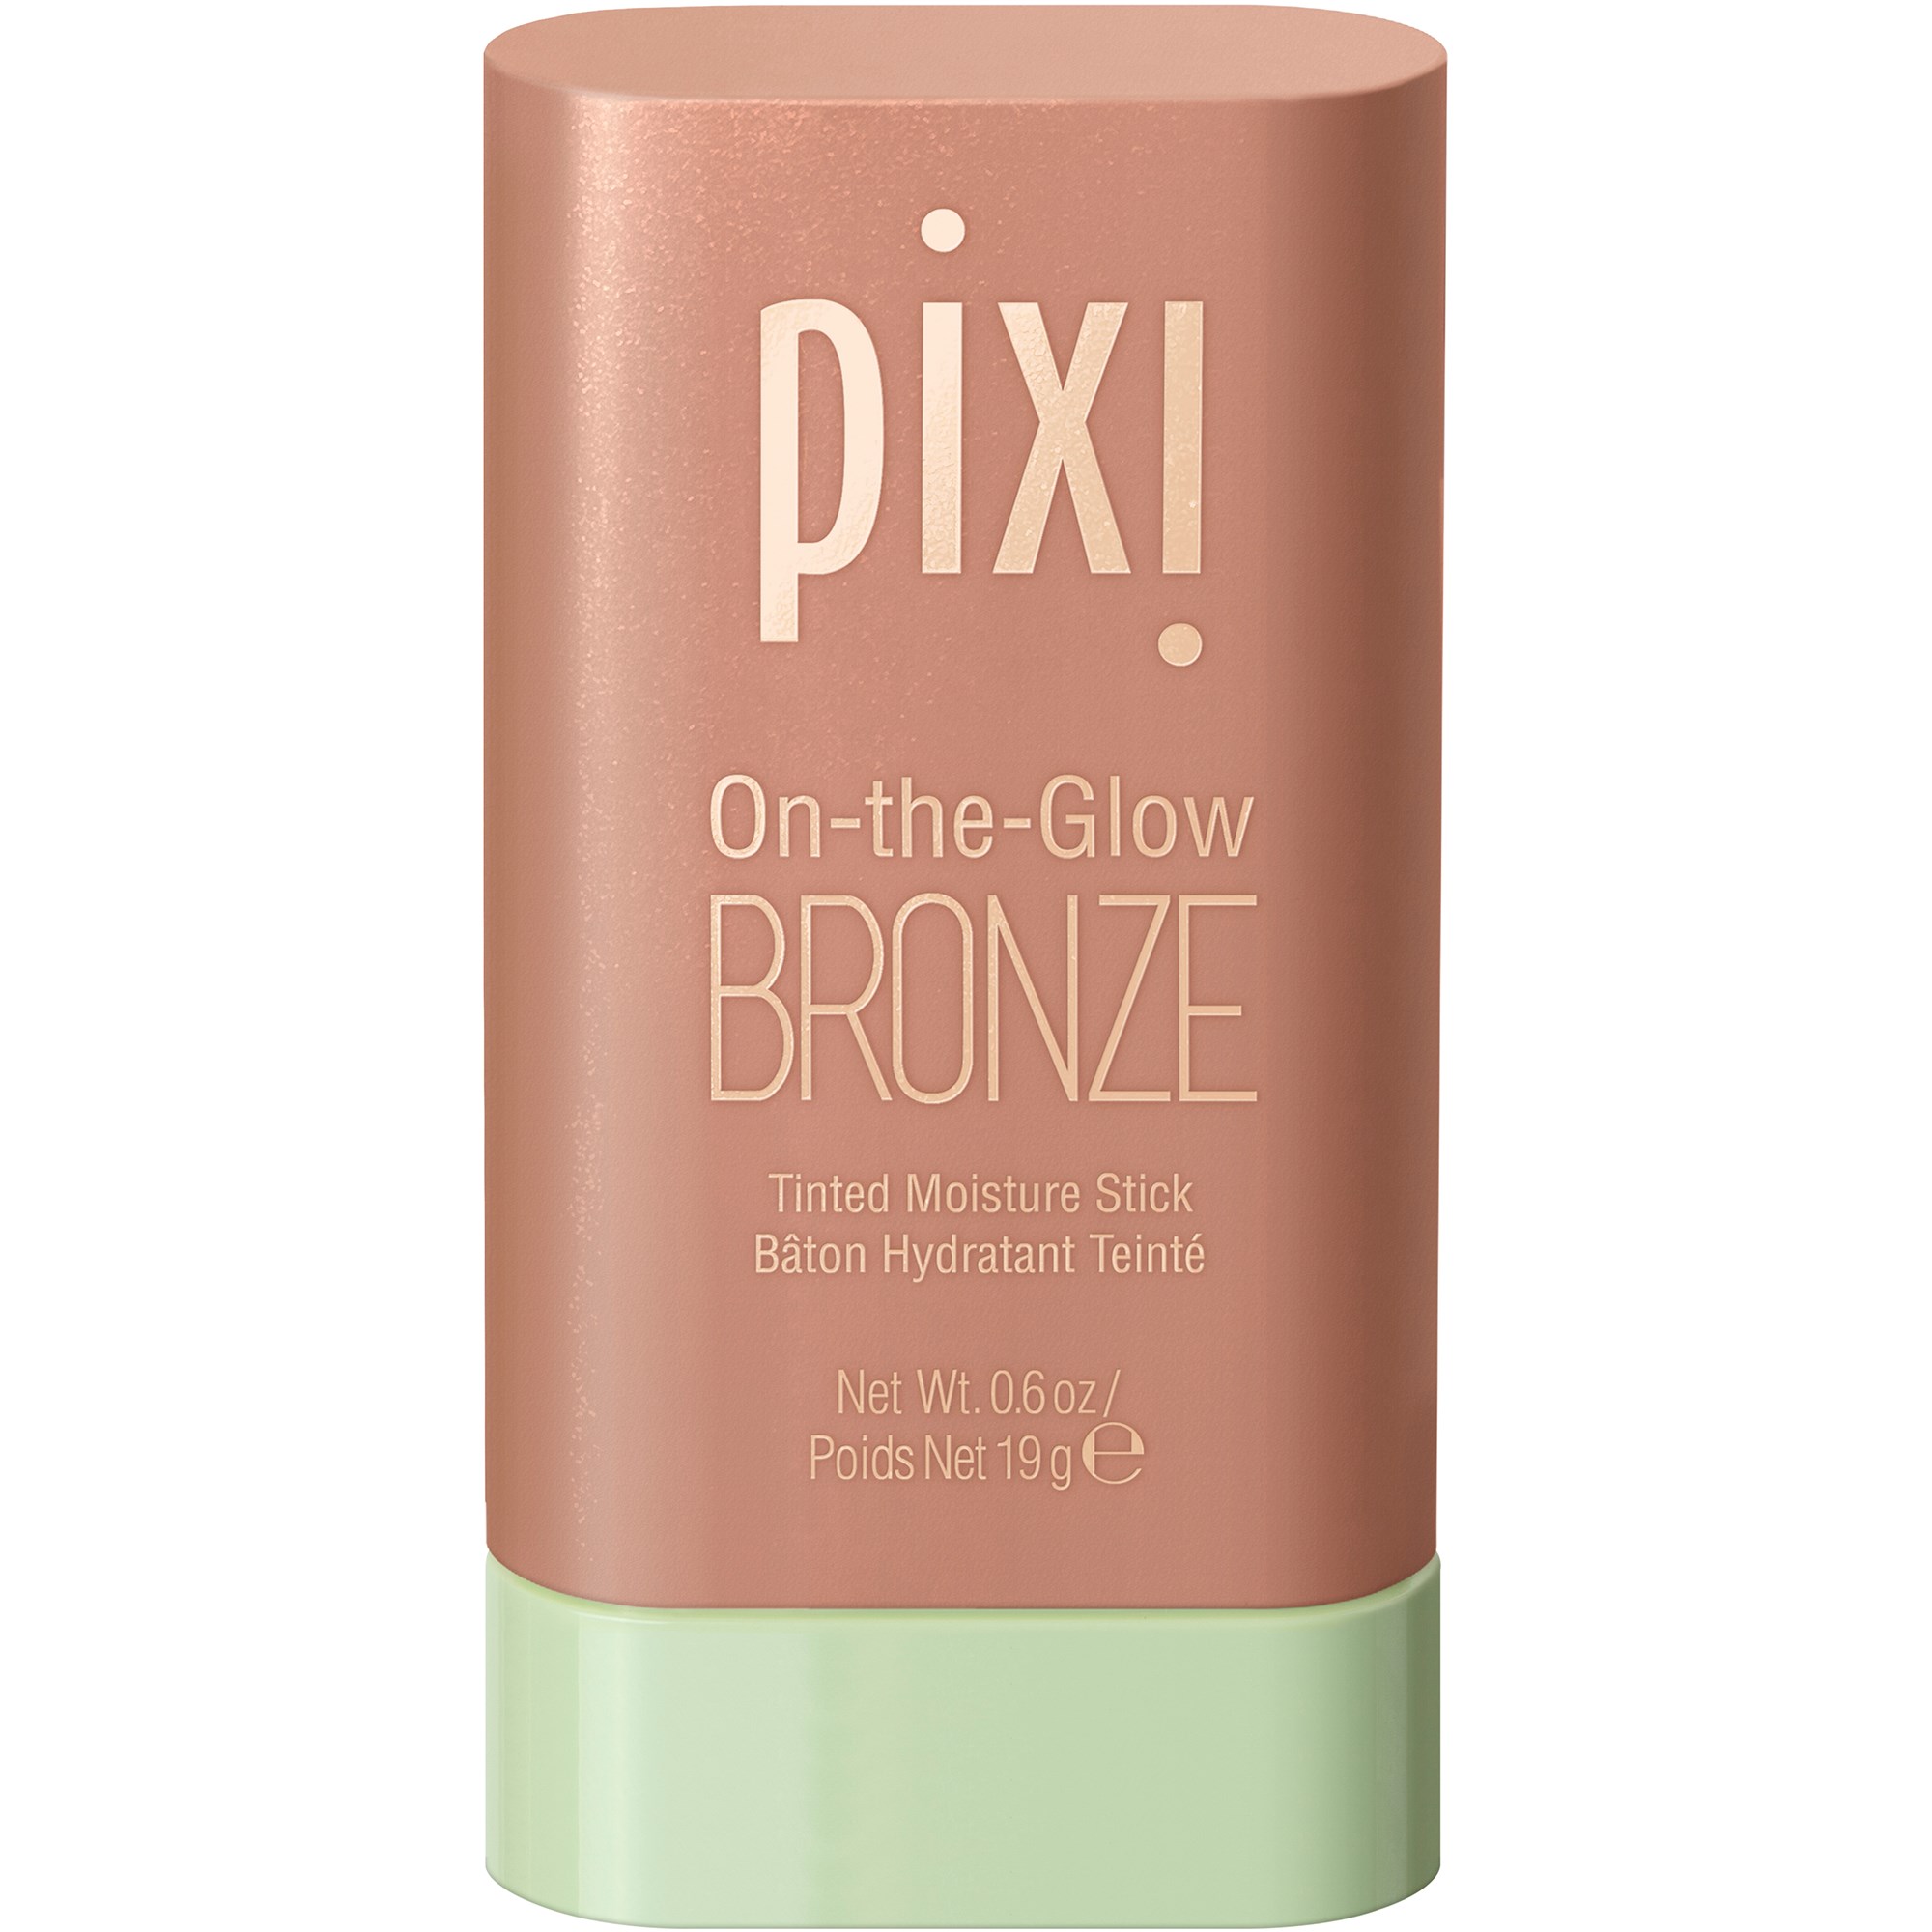 PIXI On-the-Glow Bronze SoftGlow